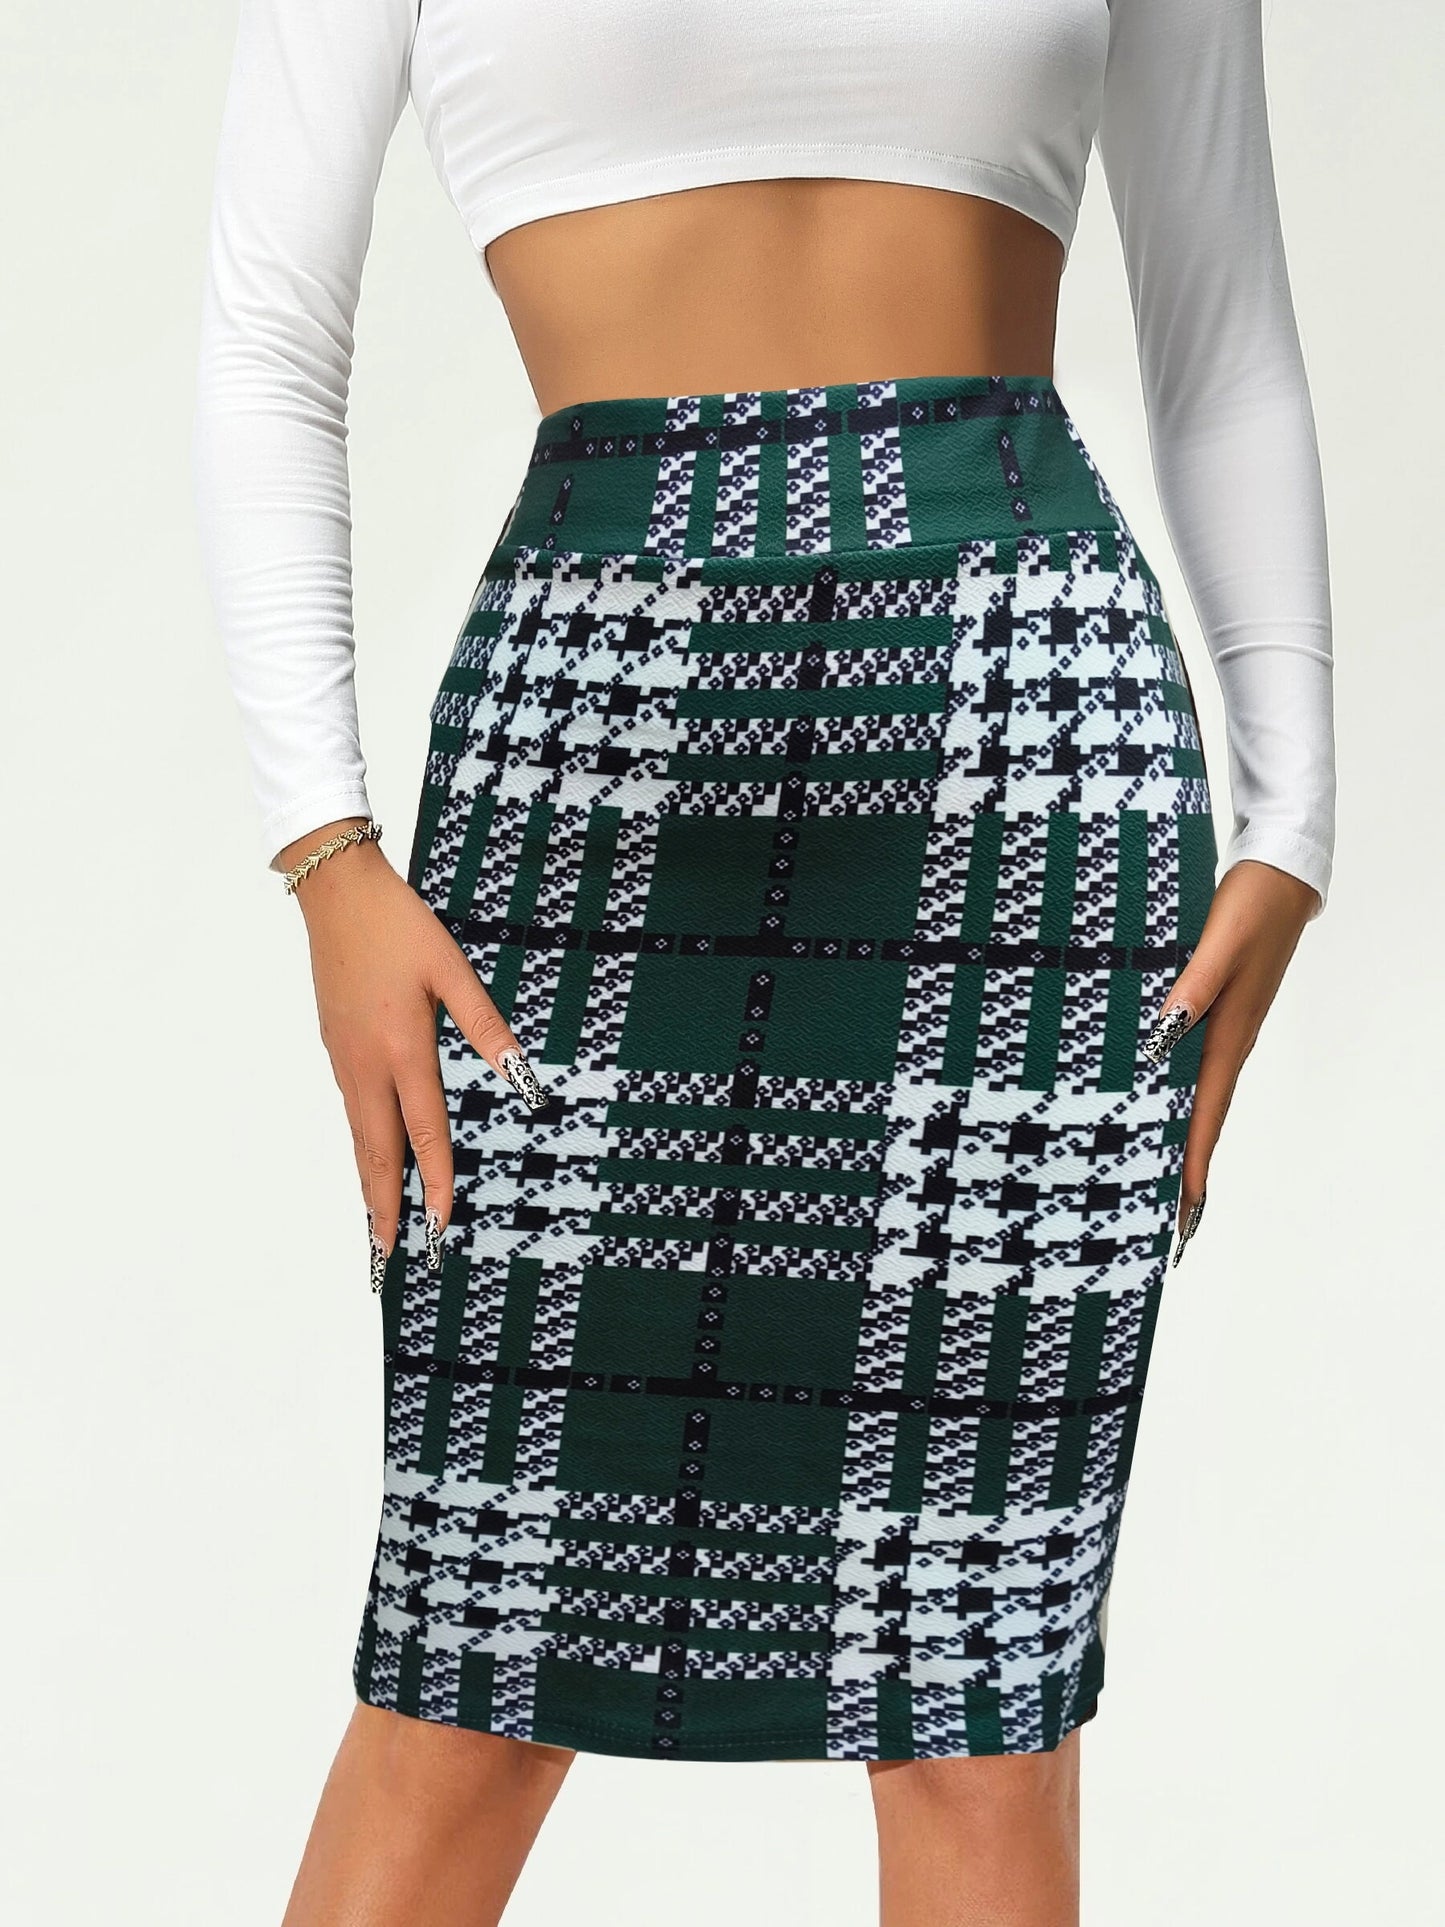 Antmvs Plaid High Waist Pencil Skirt, Elegant Knee Length Bodycon Skirt, Women's Clothing